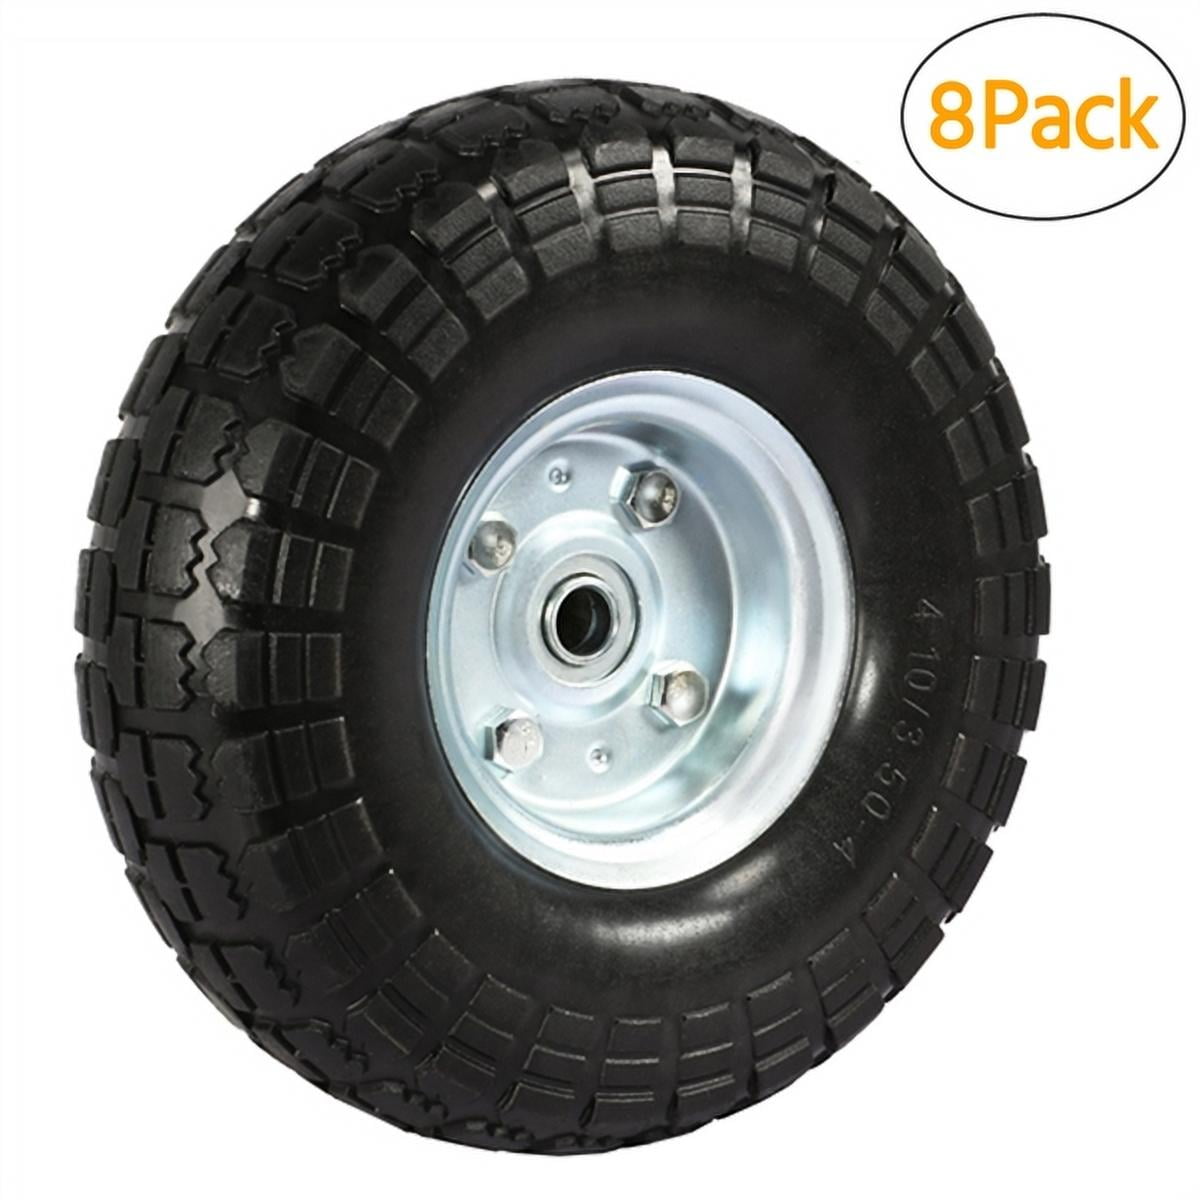 Black 10" Rubber Tire Wheels, 8 Pack